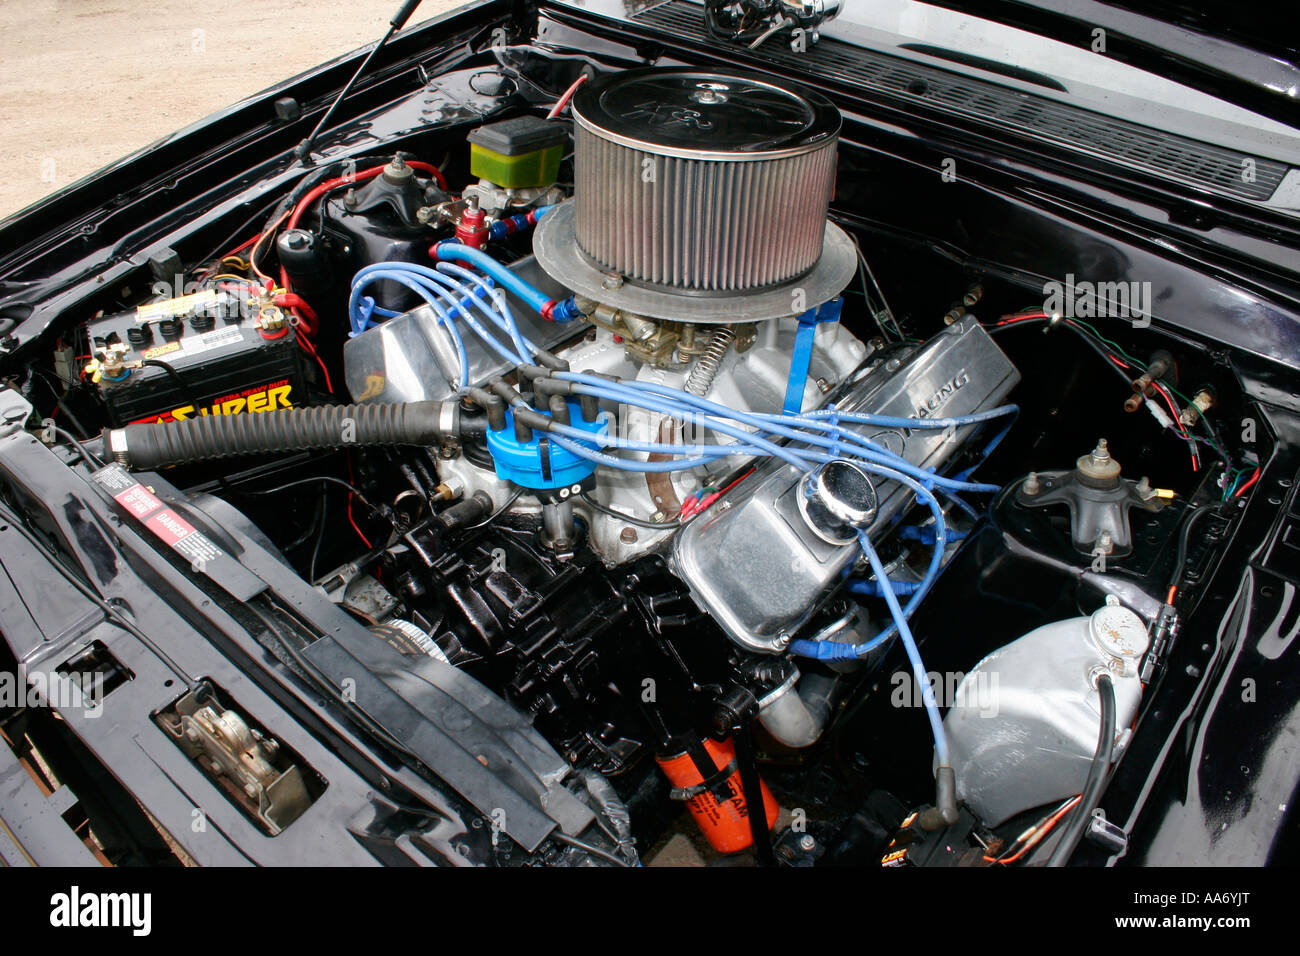 high horsepower V8 engine in an Australian Ford drag racing race car Stock  Photo - Alamy